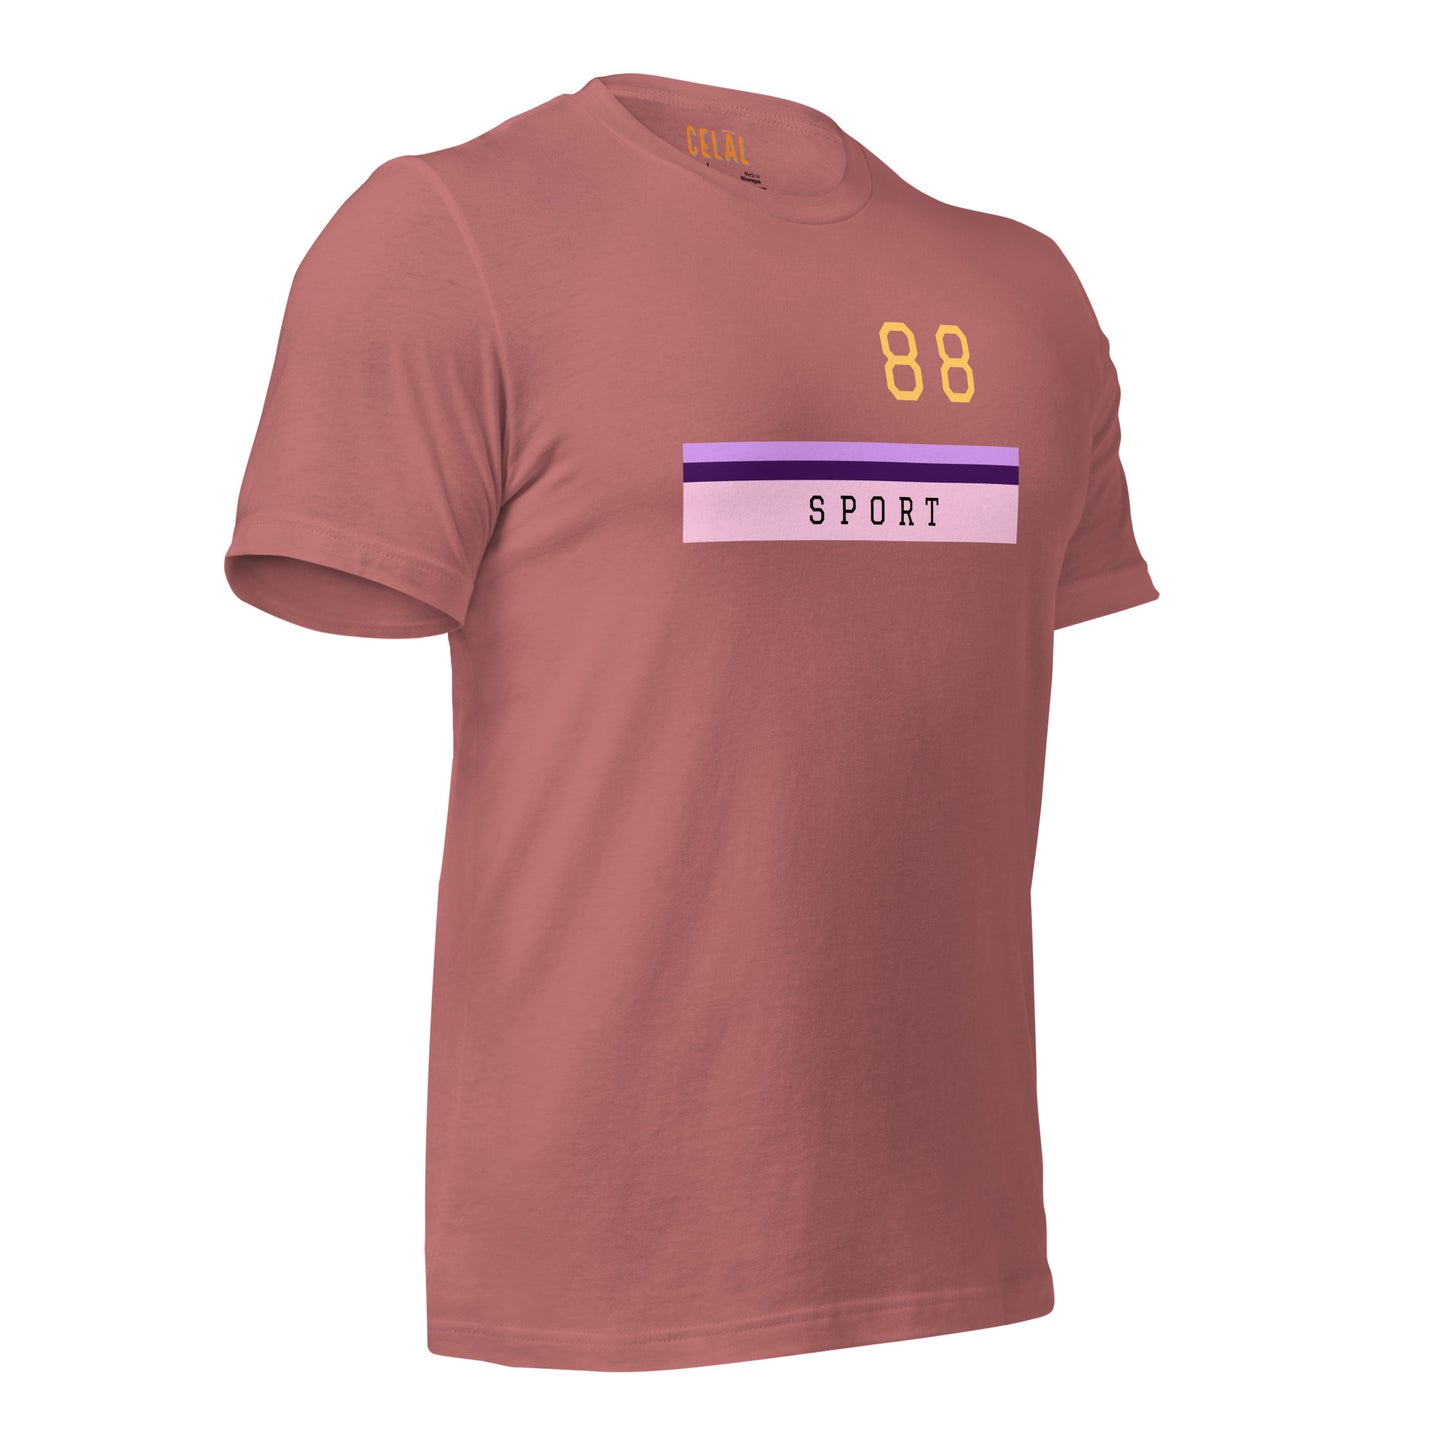 88 Unisex t-shirt